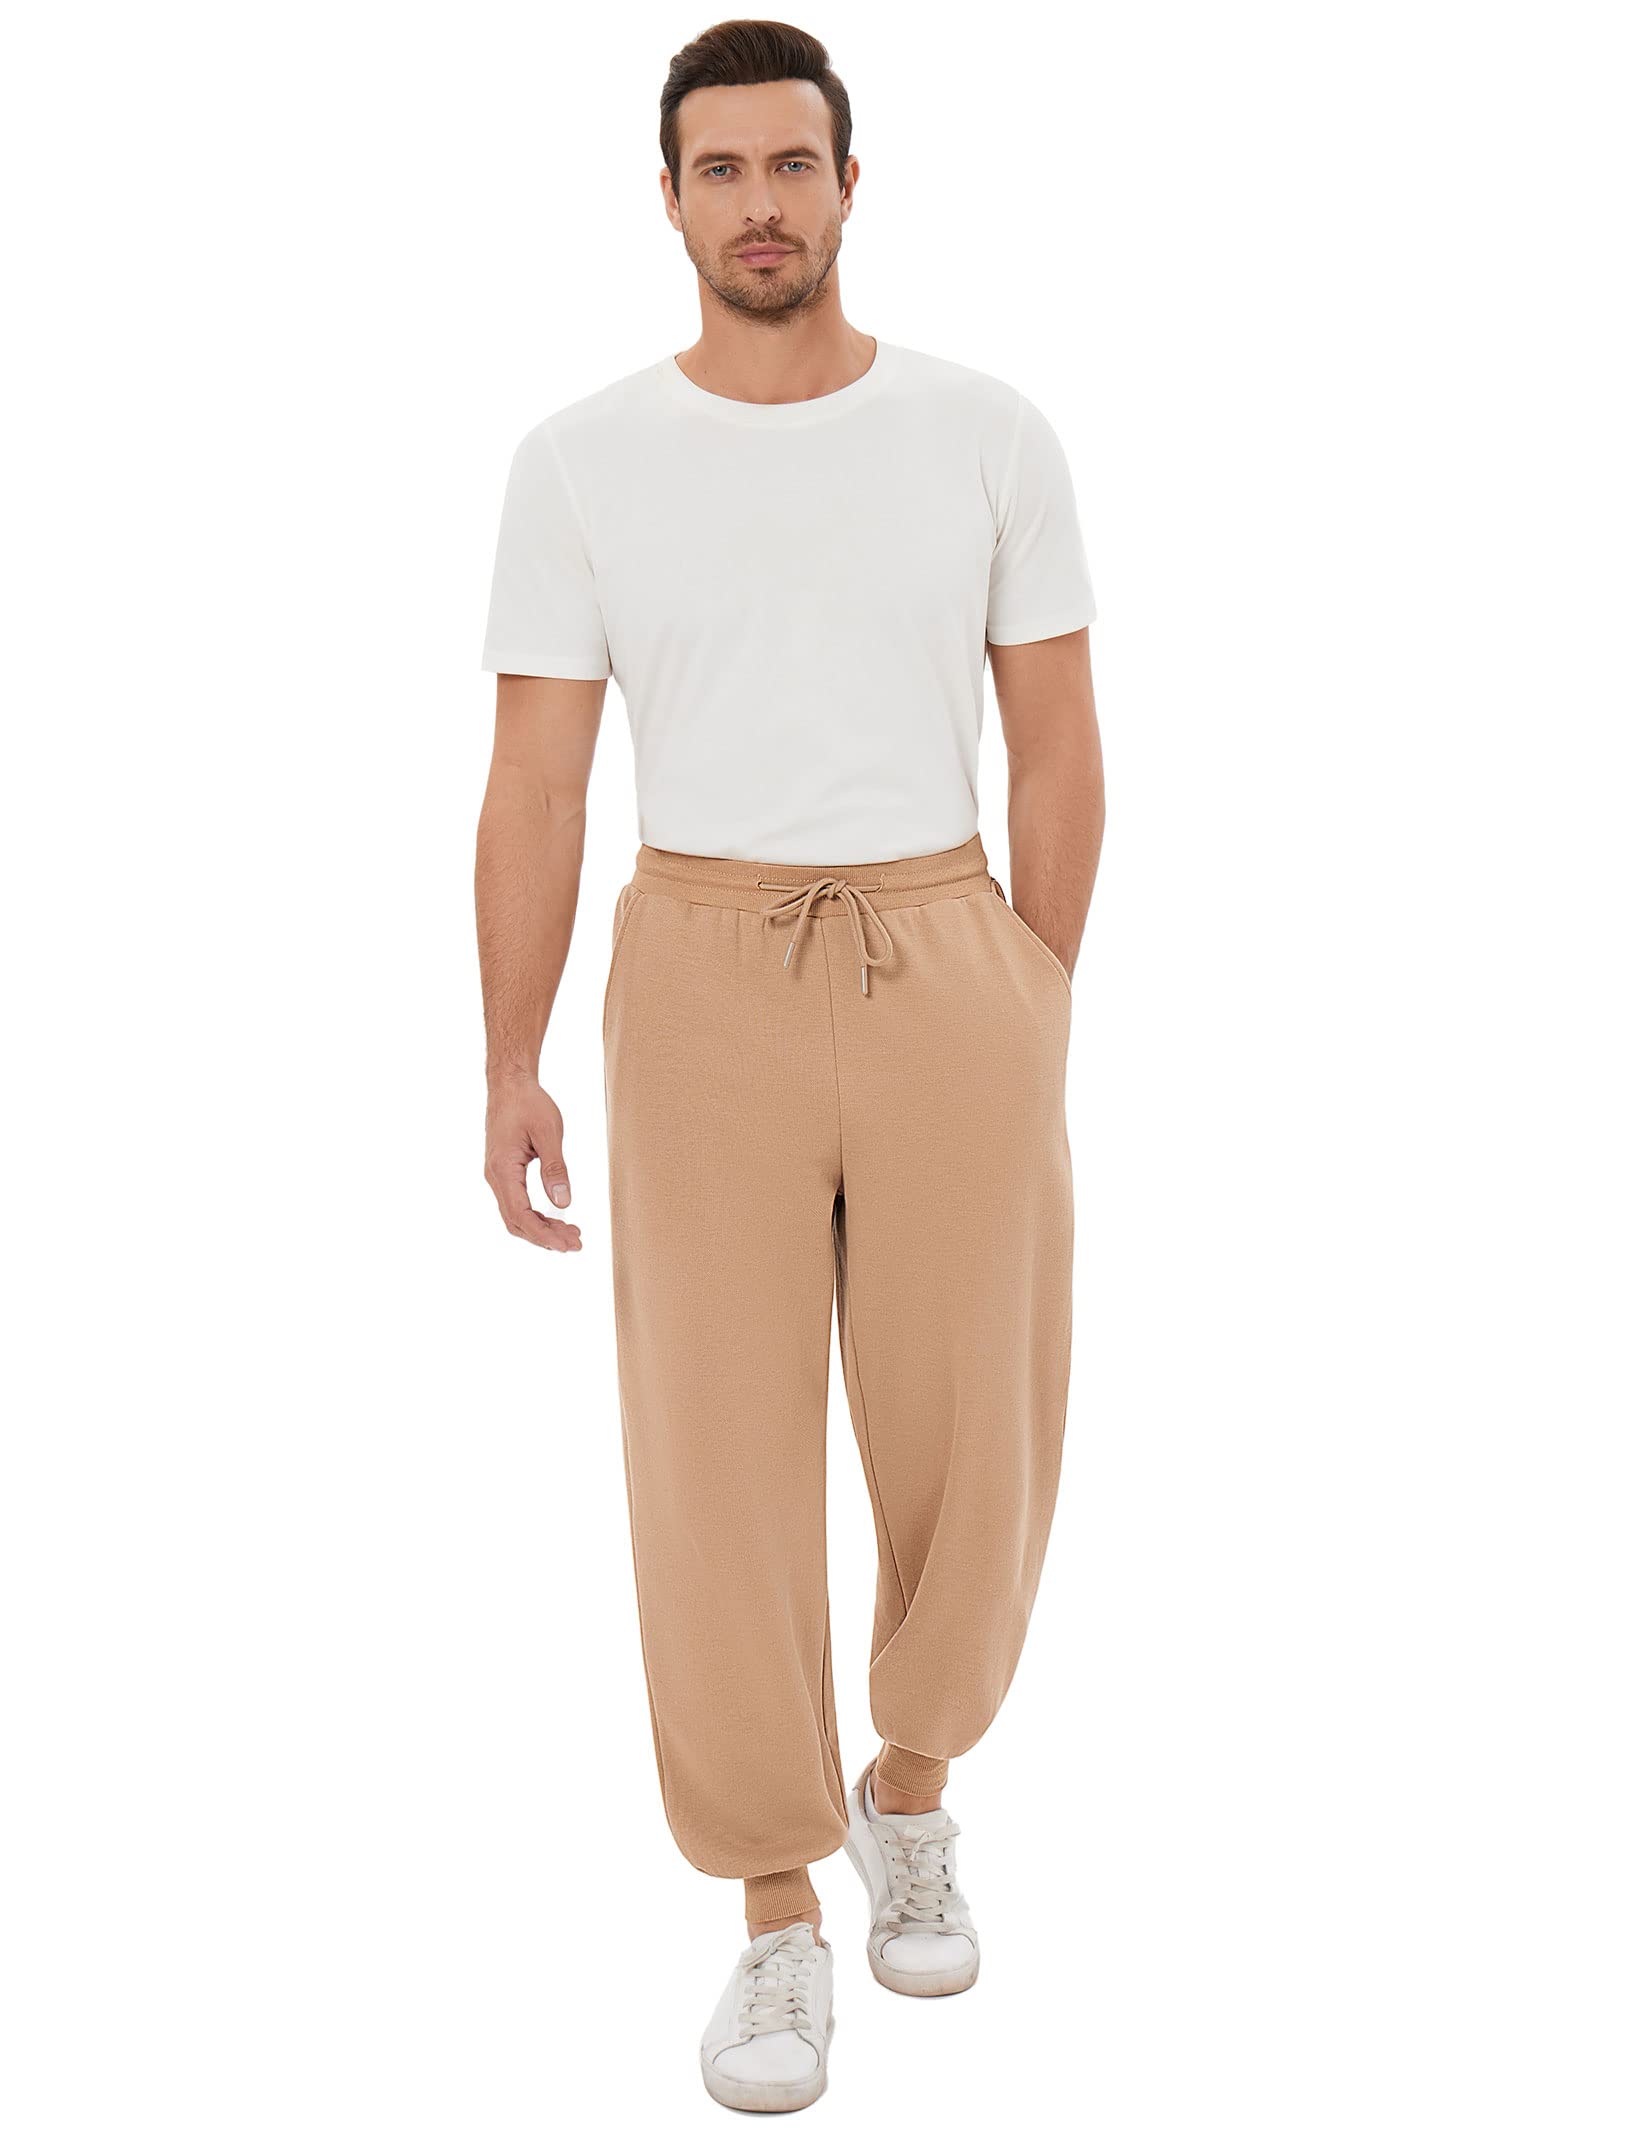 GymSmart Men's Casual Lounge Pajama Yoga Jogger Pants Open Bottom Sweatpants with Pockets